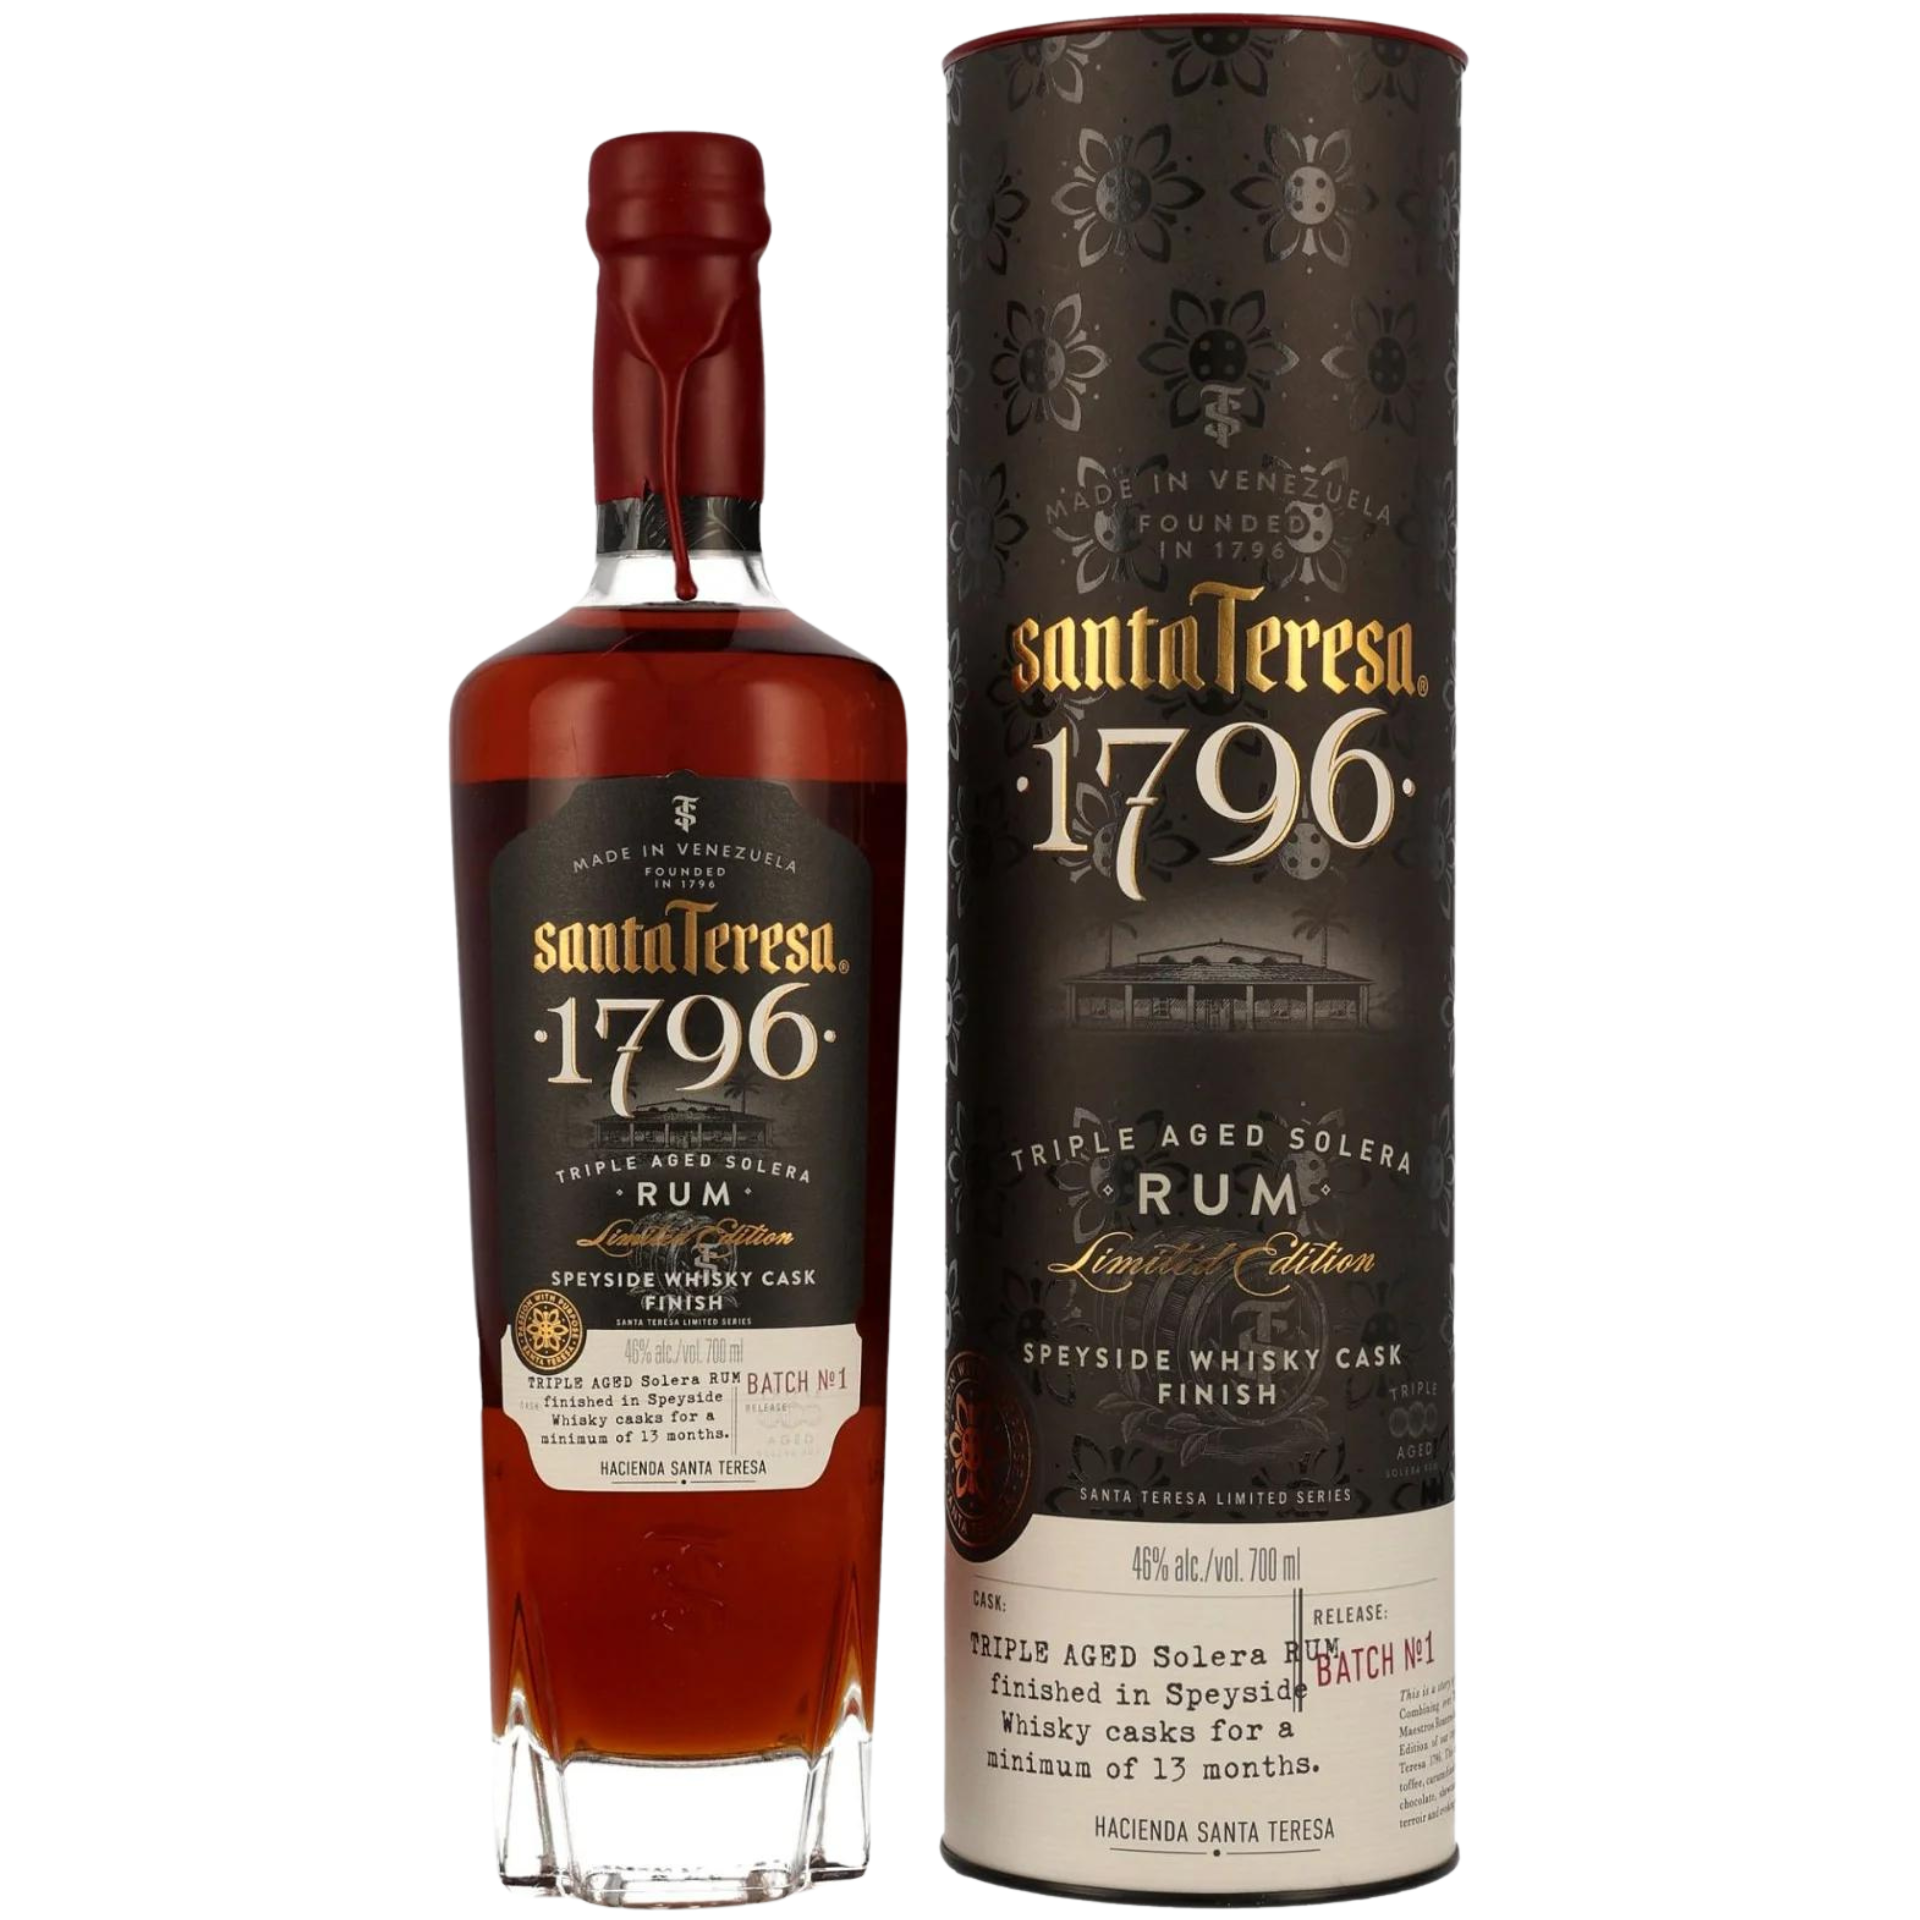 Santa Teresa Rum Speyside Whisky Cask Finish Limited Edition 46% 0,7l